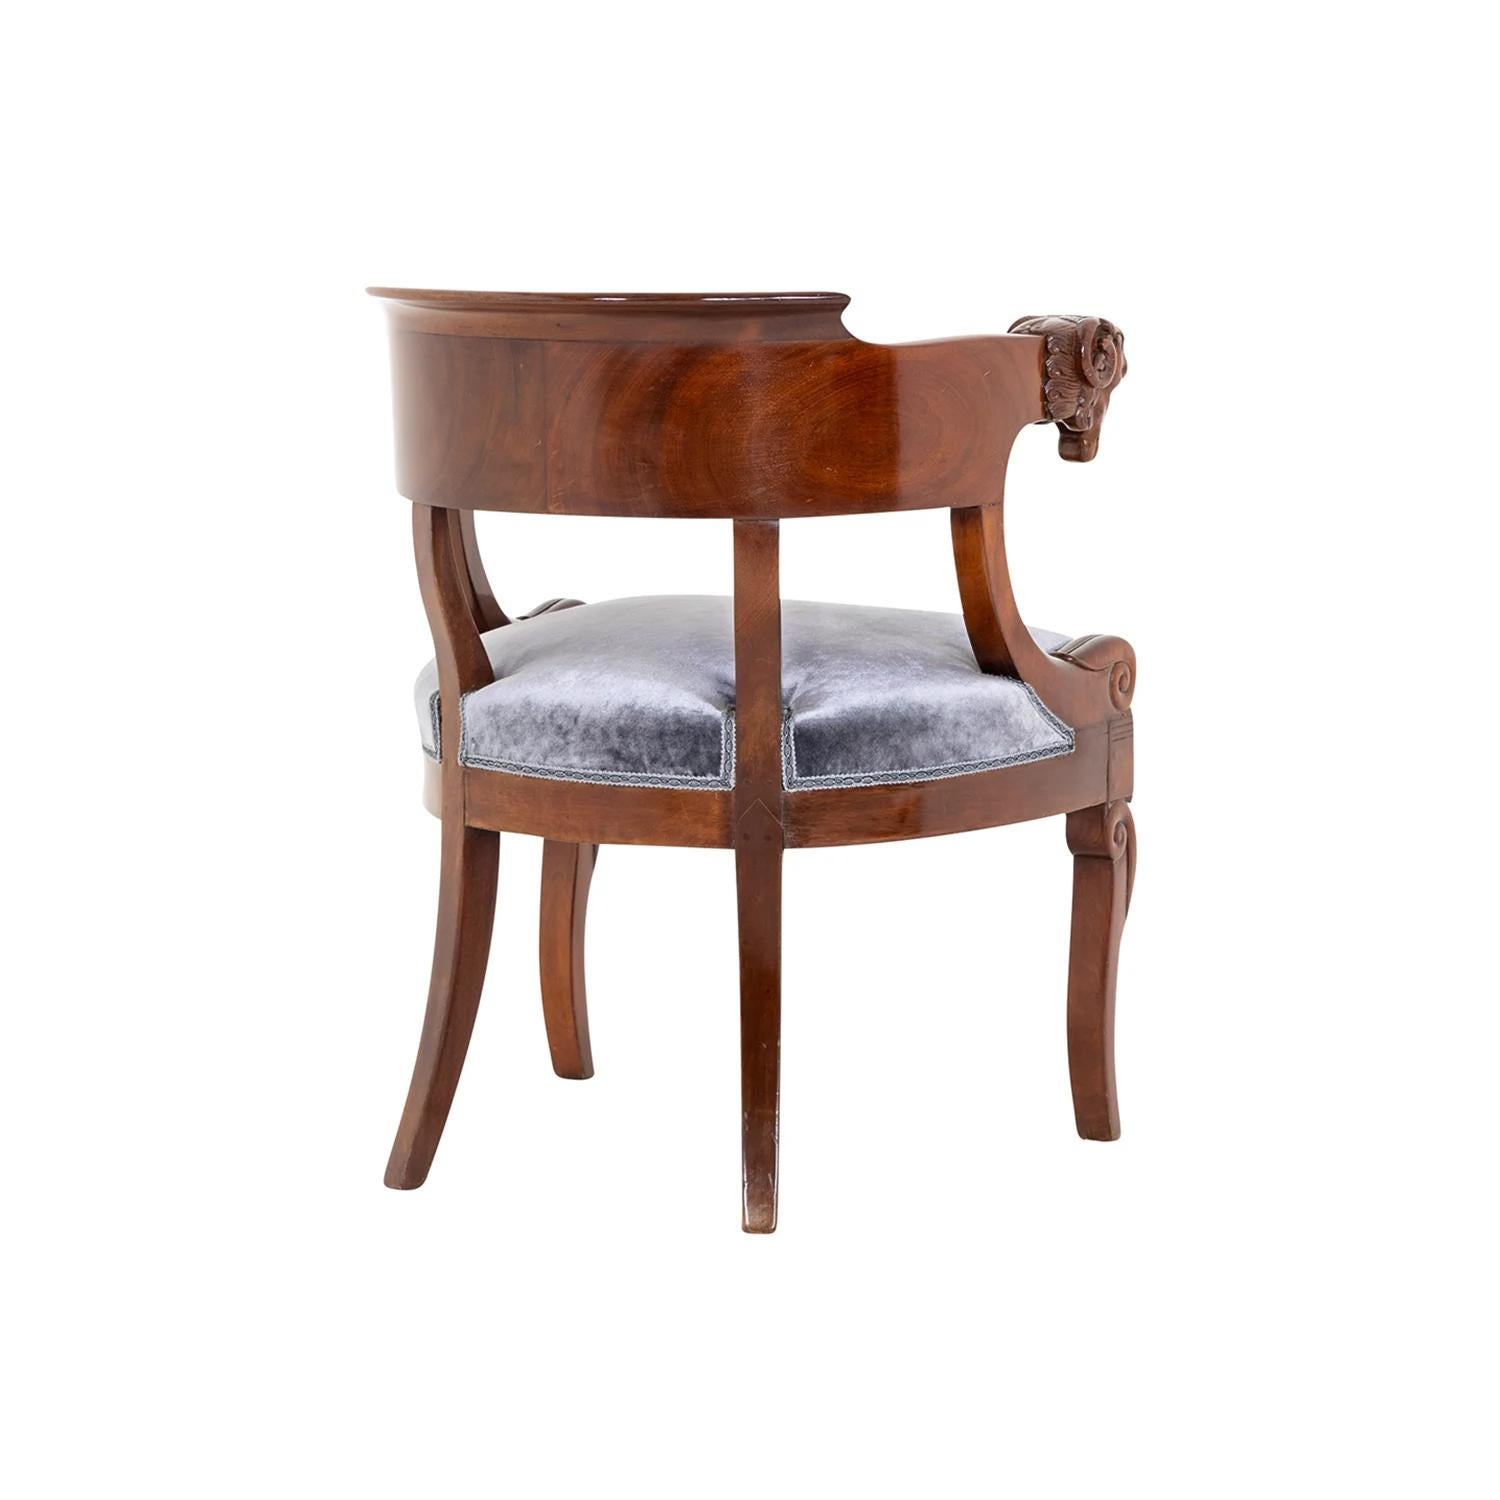 19th Century German Biedermeier Polished Mahogany Armchair - Antique Side Chair For Sale 4